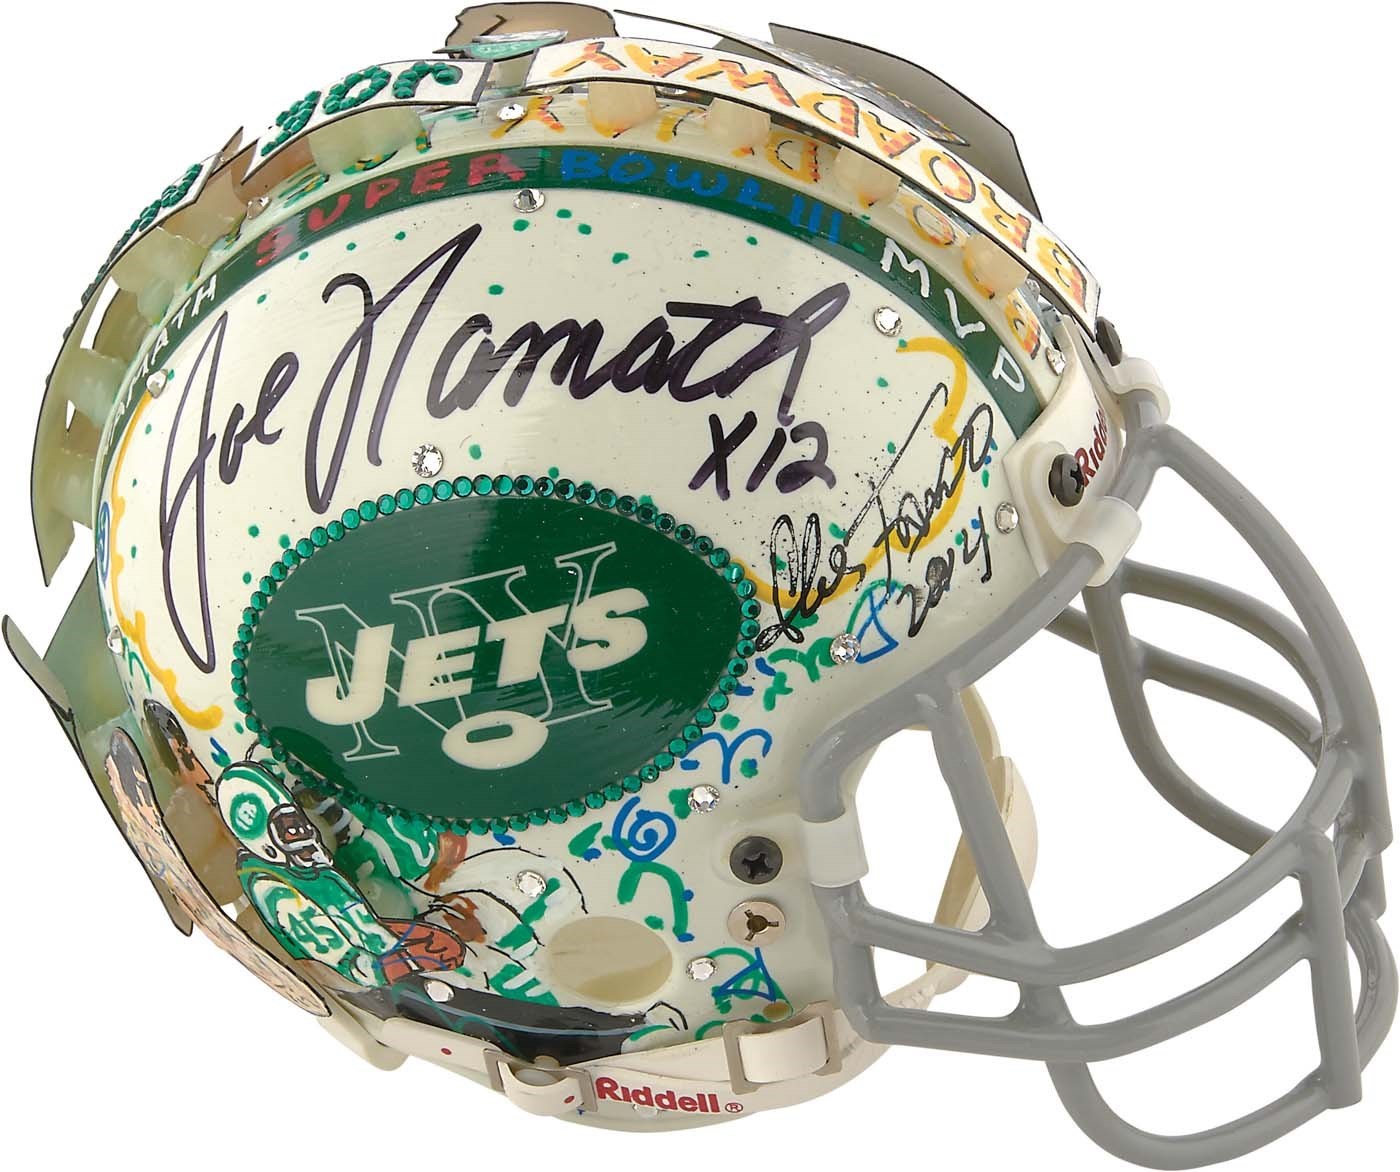 Wonderful 2014 Joe Namath Signed Mini Helmet by Charles Fazzino